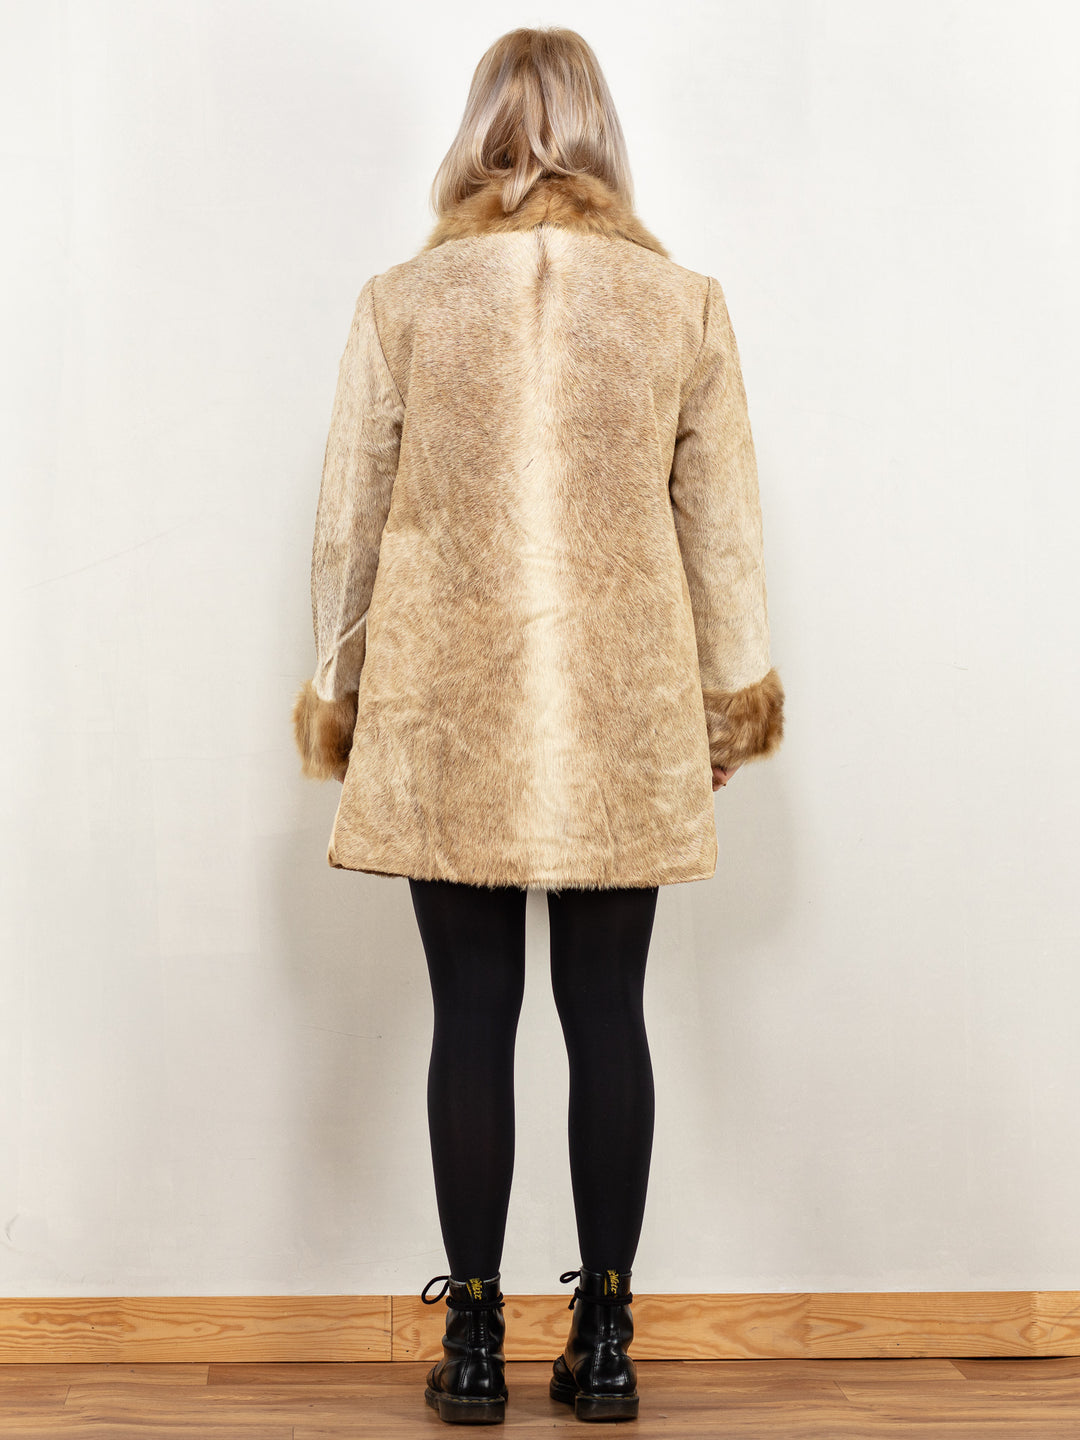 60's fur coat vintage womens beige cow fur coat penny lane style opera coat afghan coat princess luxurious coat sustainable size large